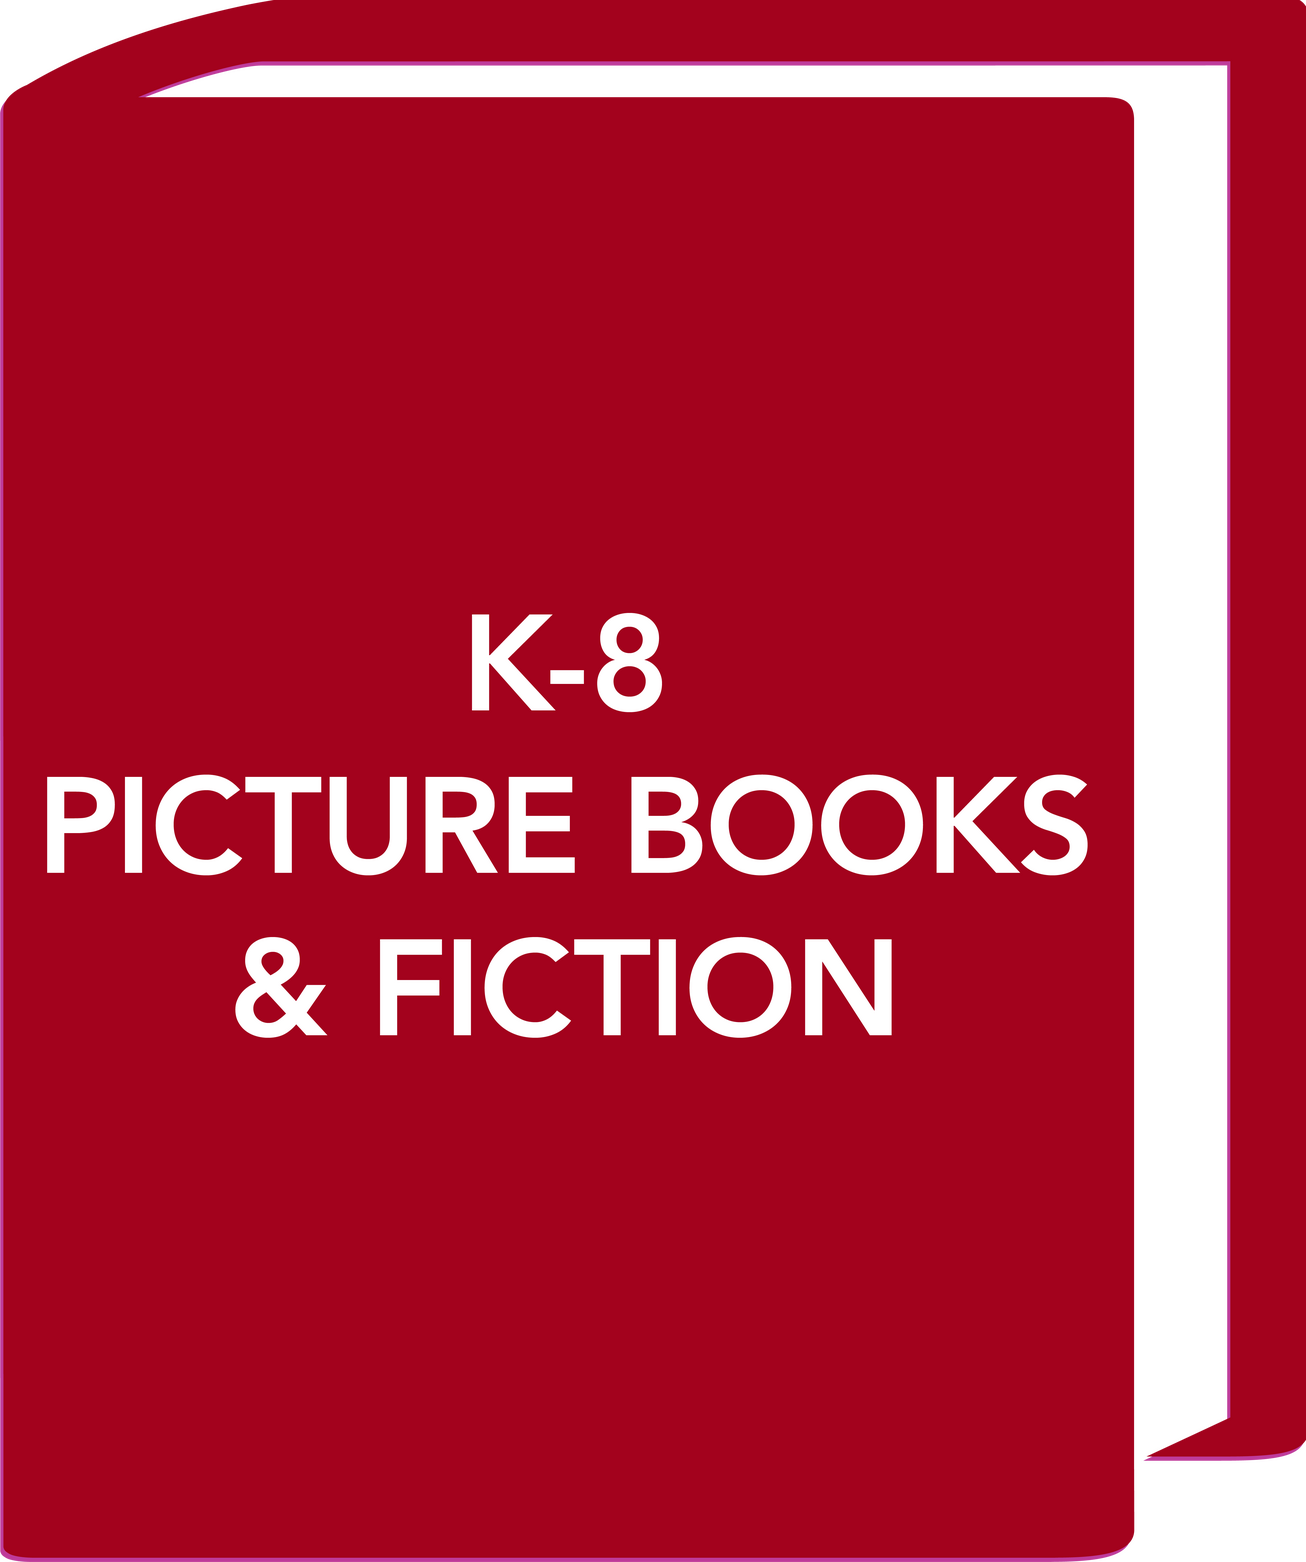 K-8 Picture Books & Fiction